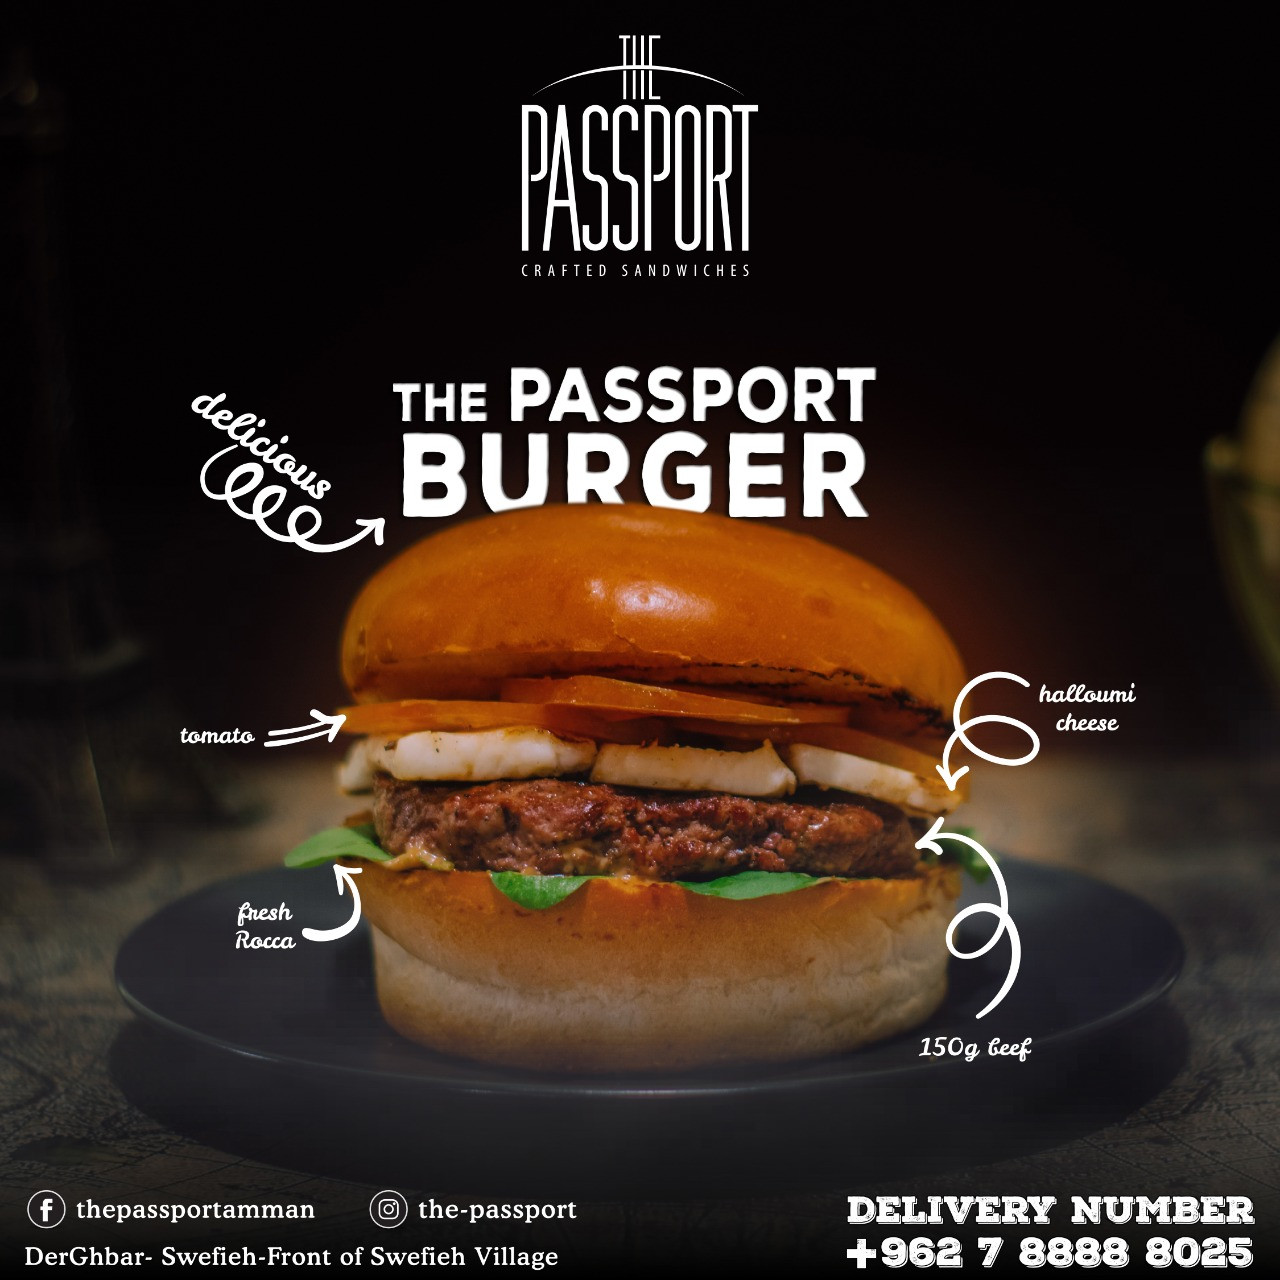 The Passport burger